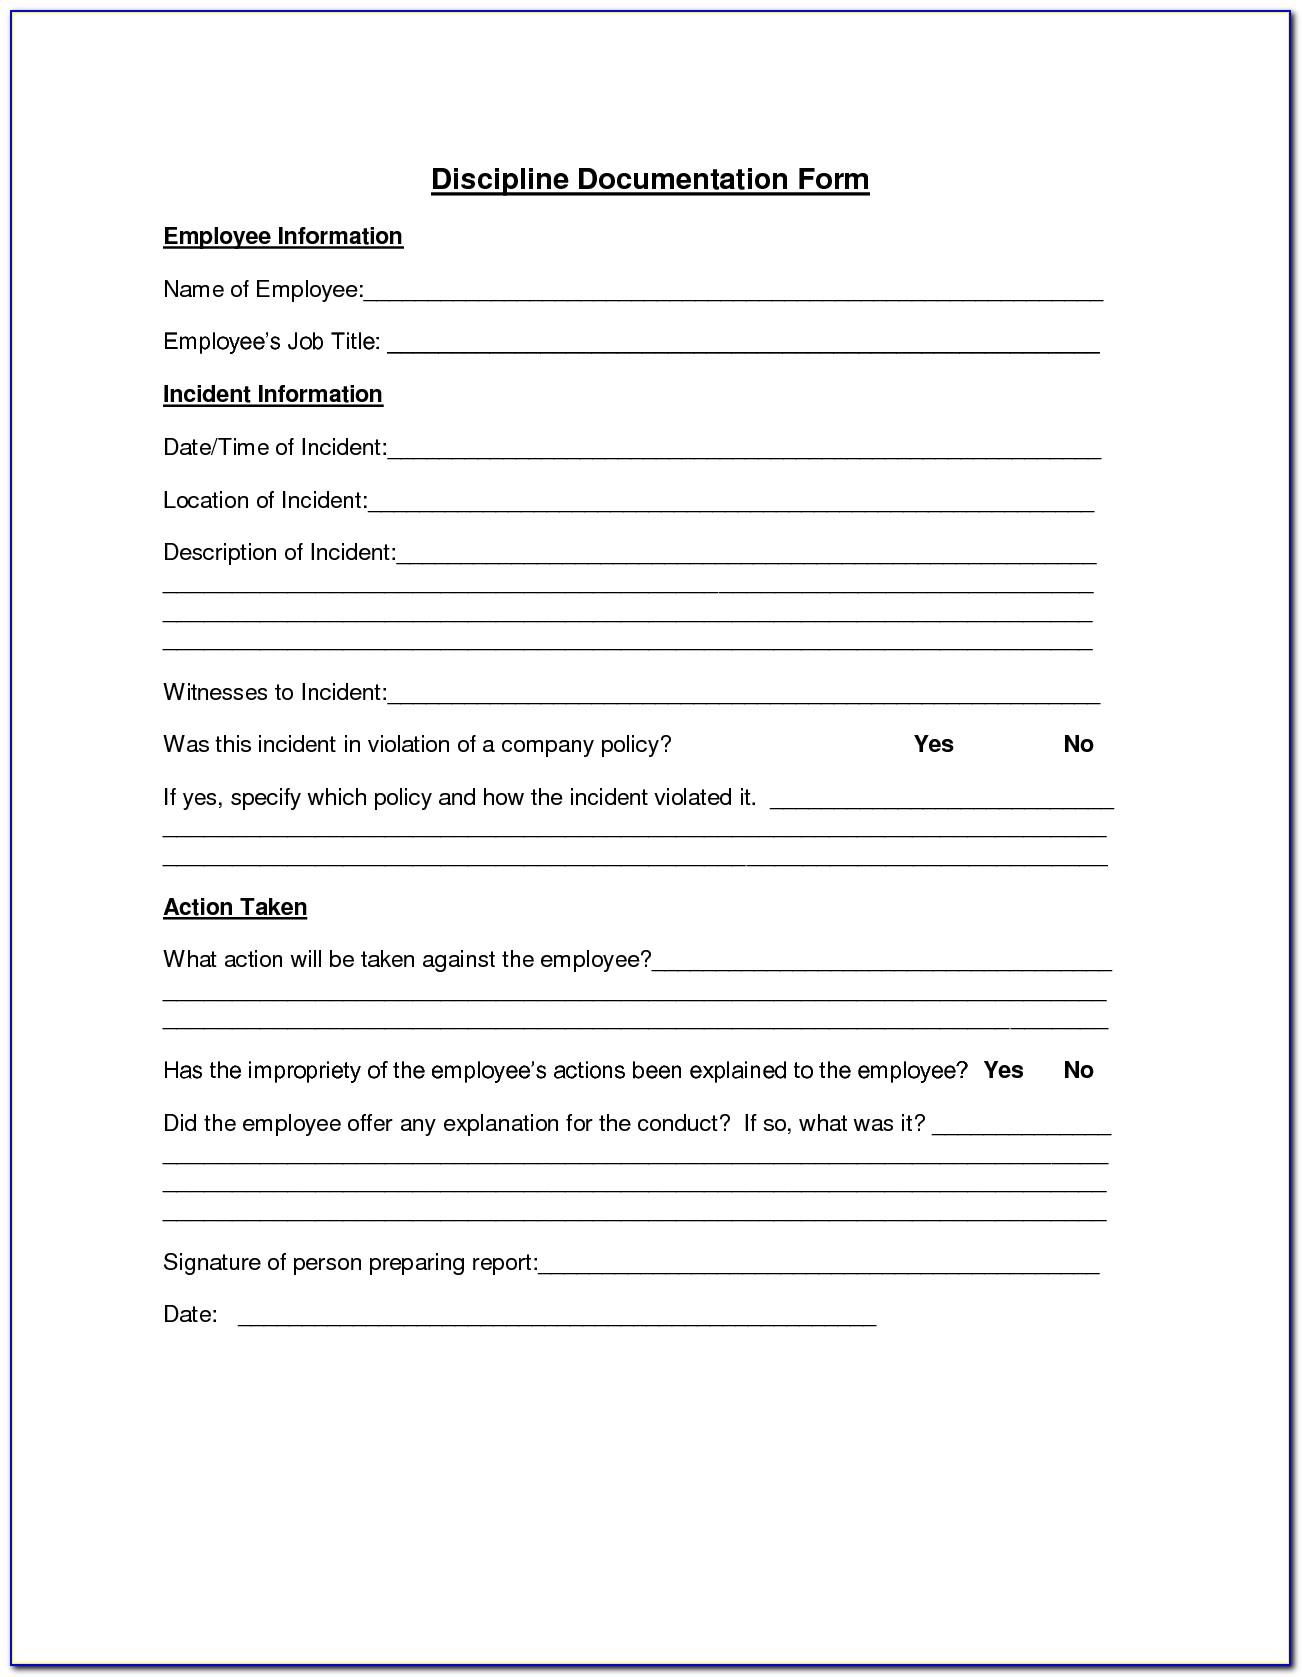 Free Employee Discipline Form Template